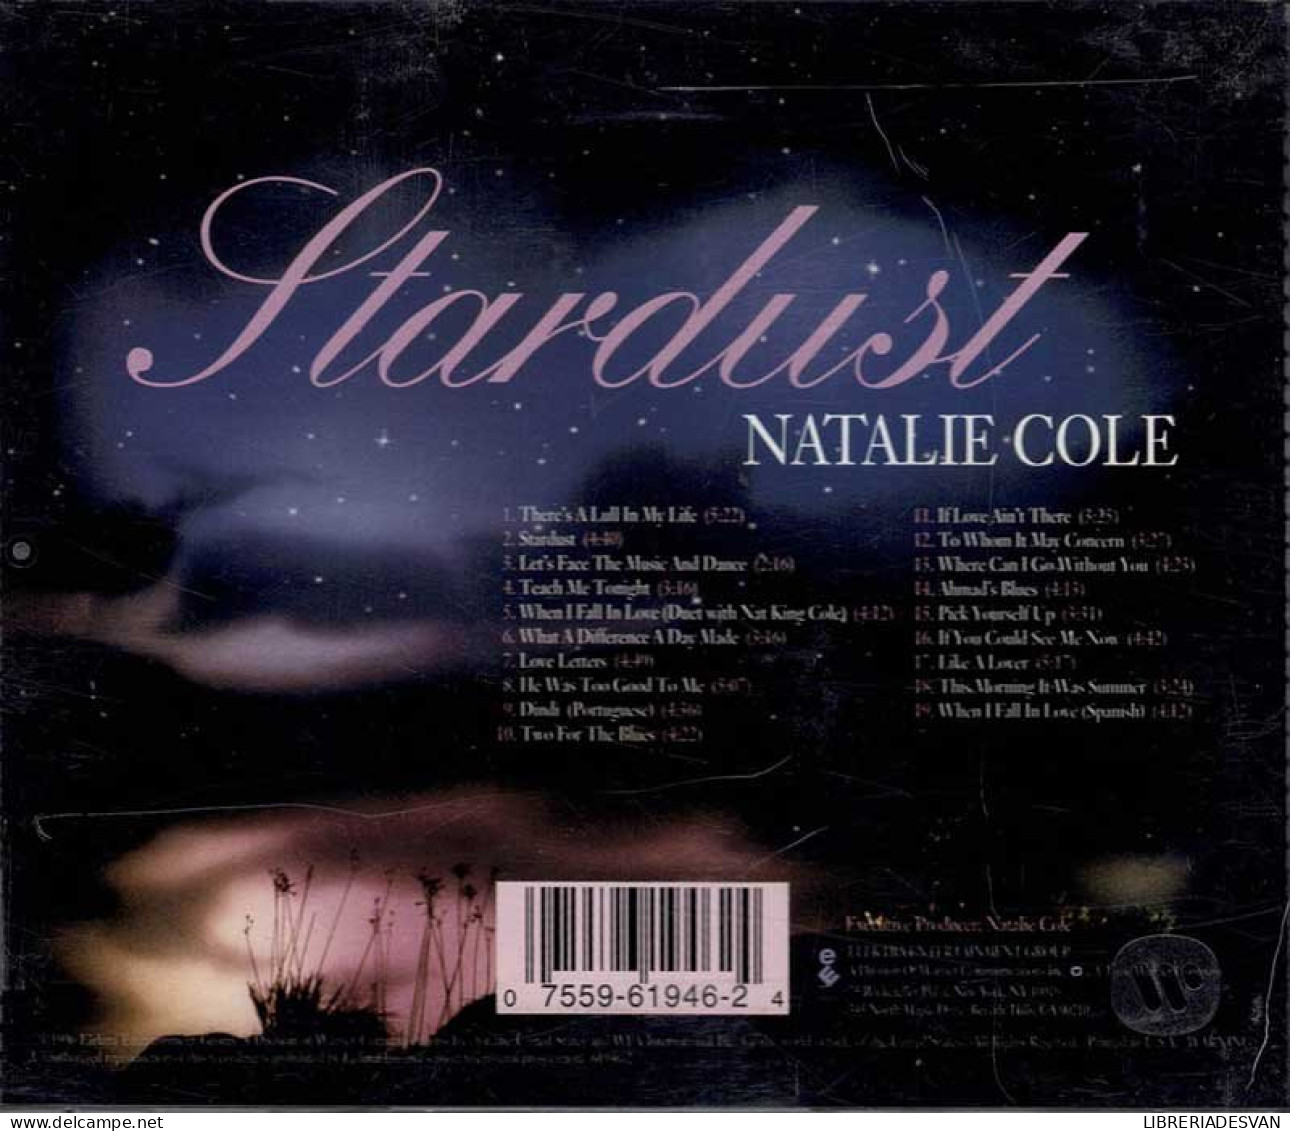 Natalie Cole - Stardust. CD - Jazz